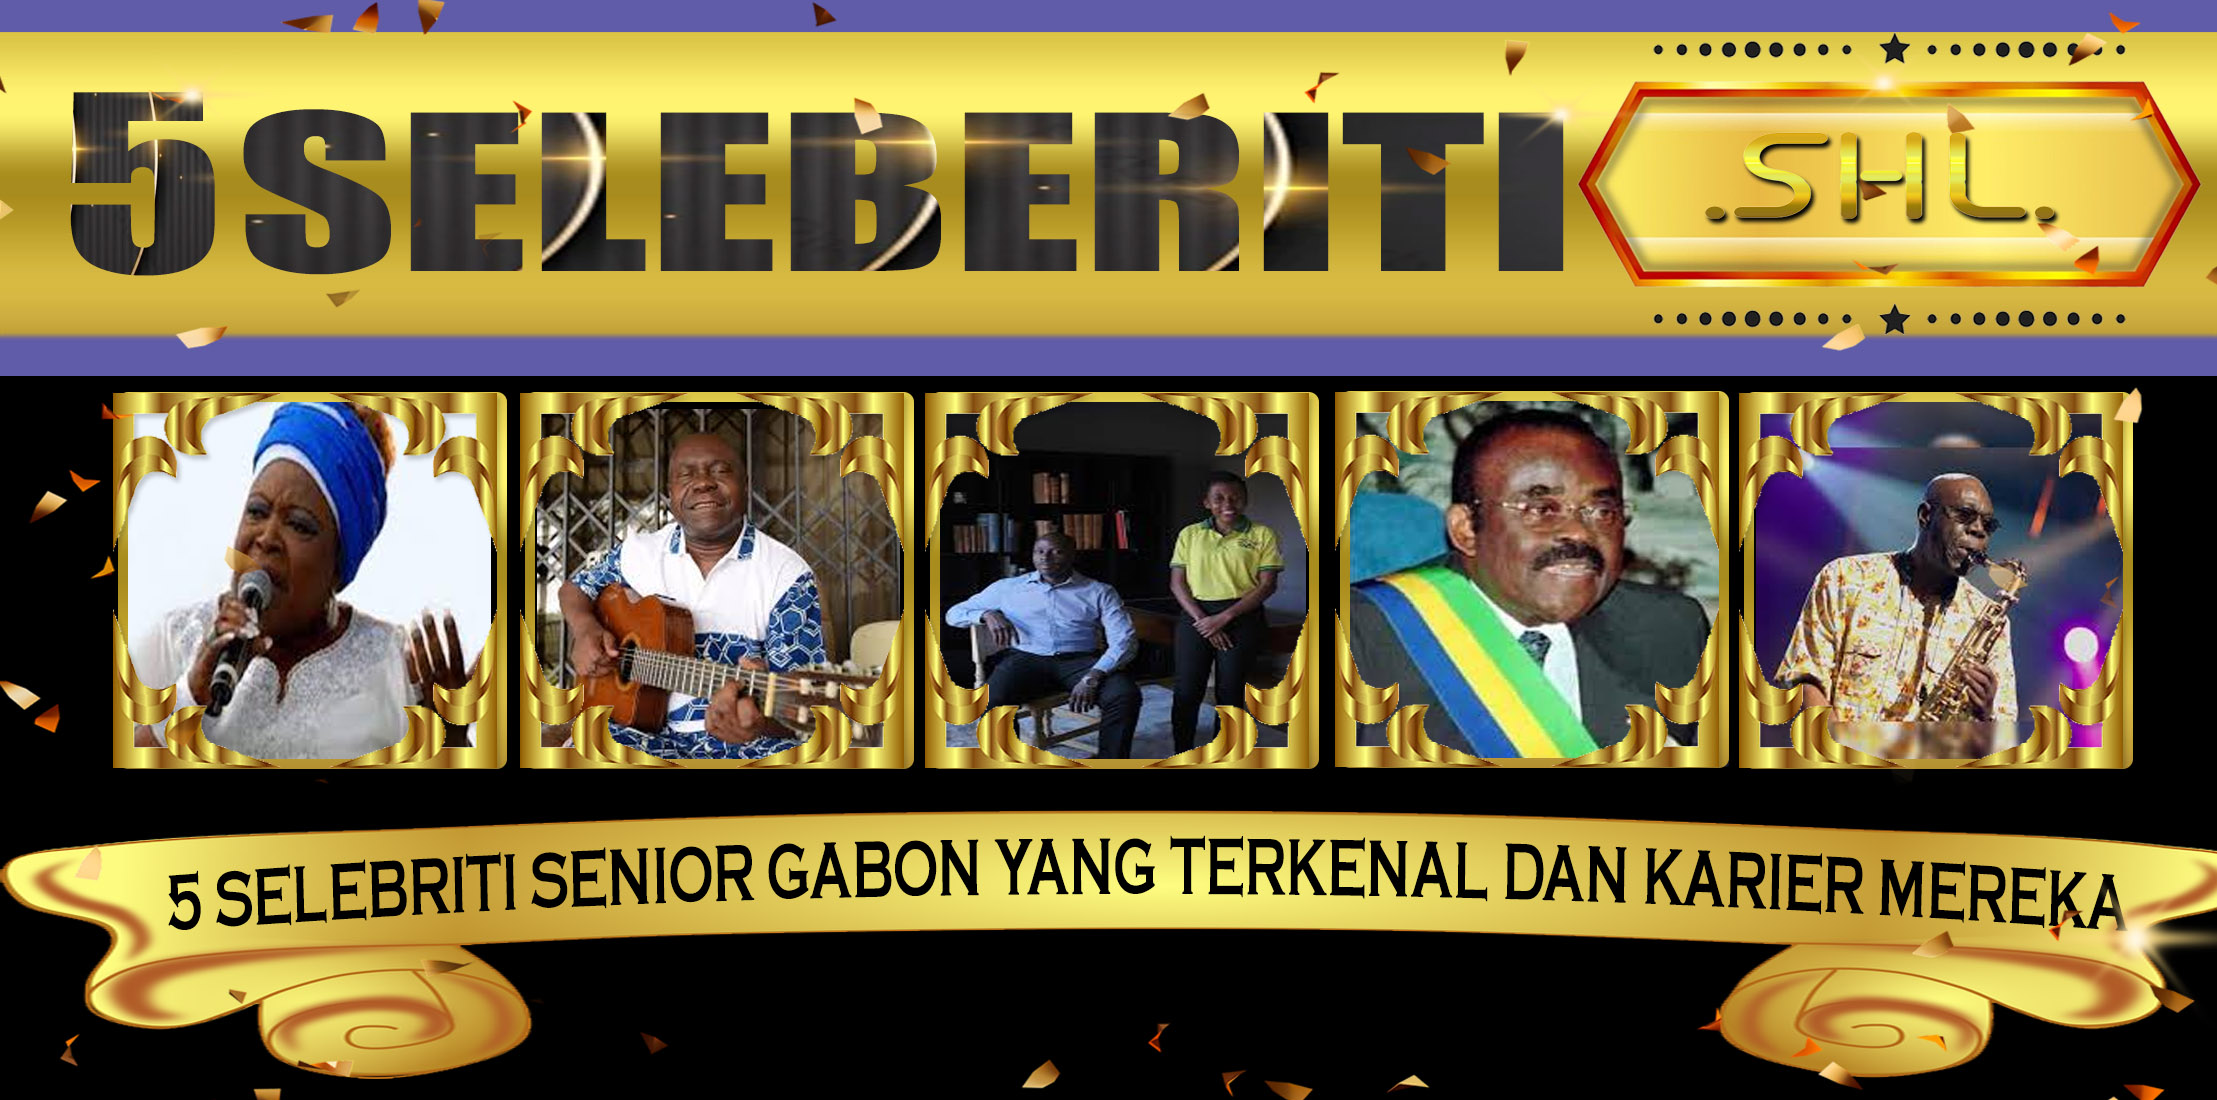 5 Selebriti Senior Gabon